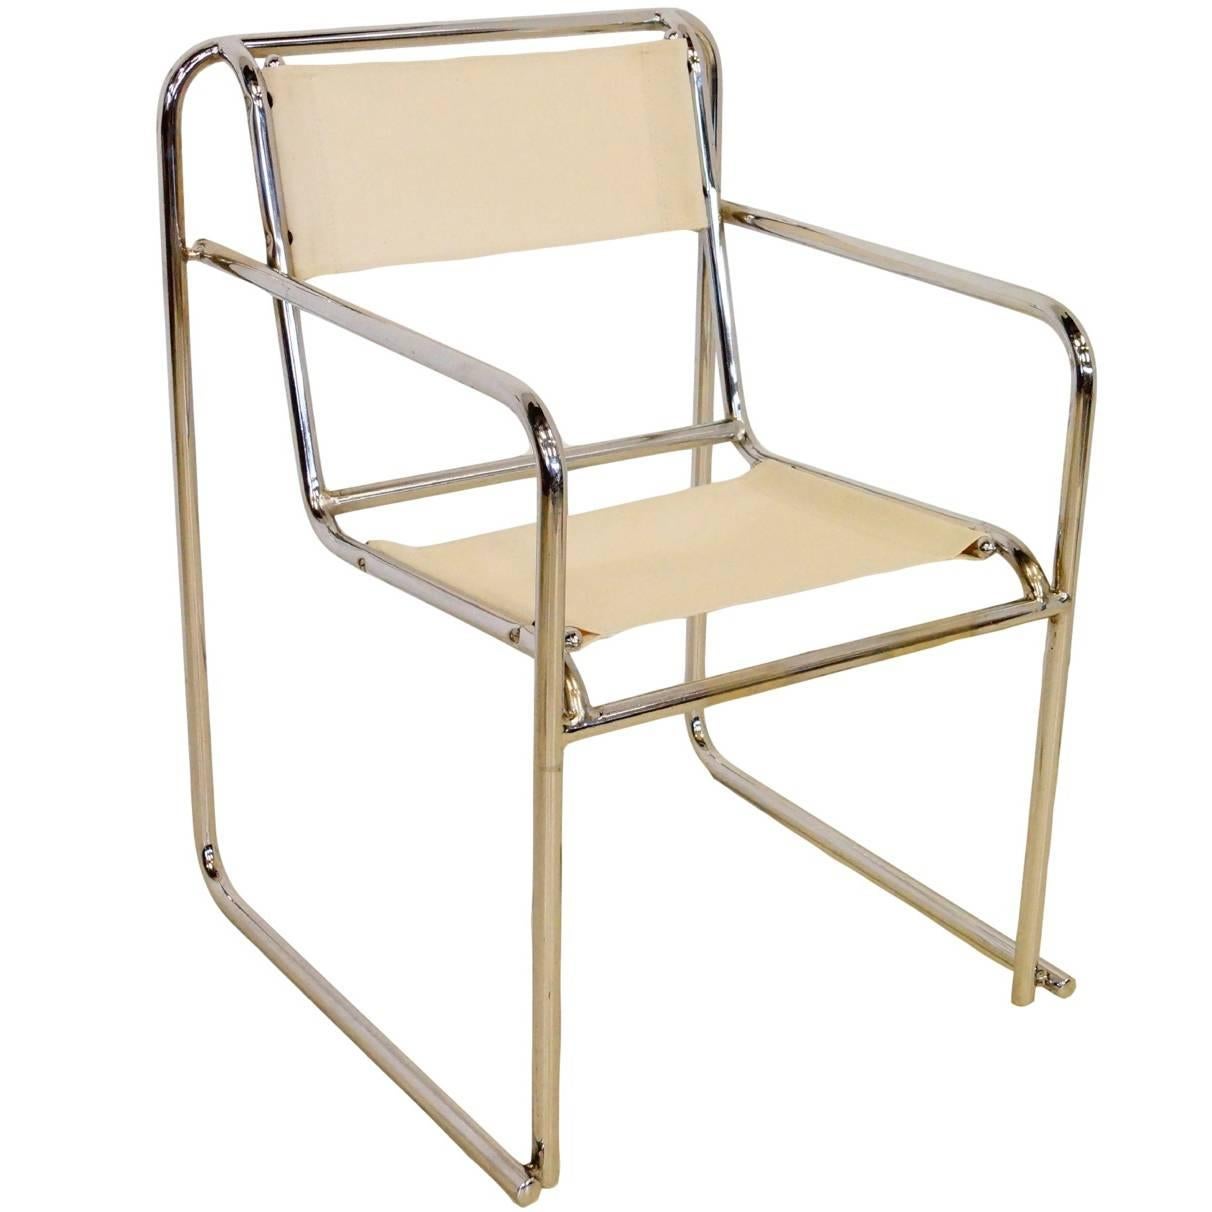 RP-7 Bauhaus Chair by Bruno Pollak for Pel, Oldbury, 1932